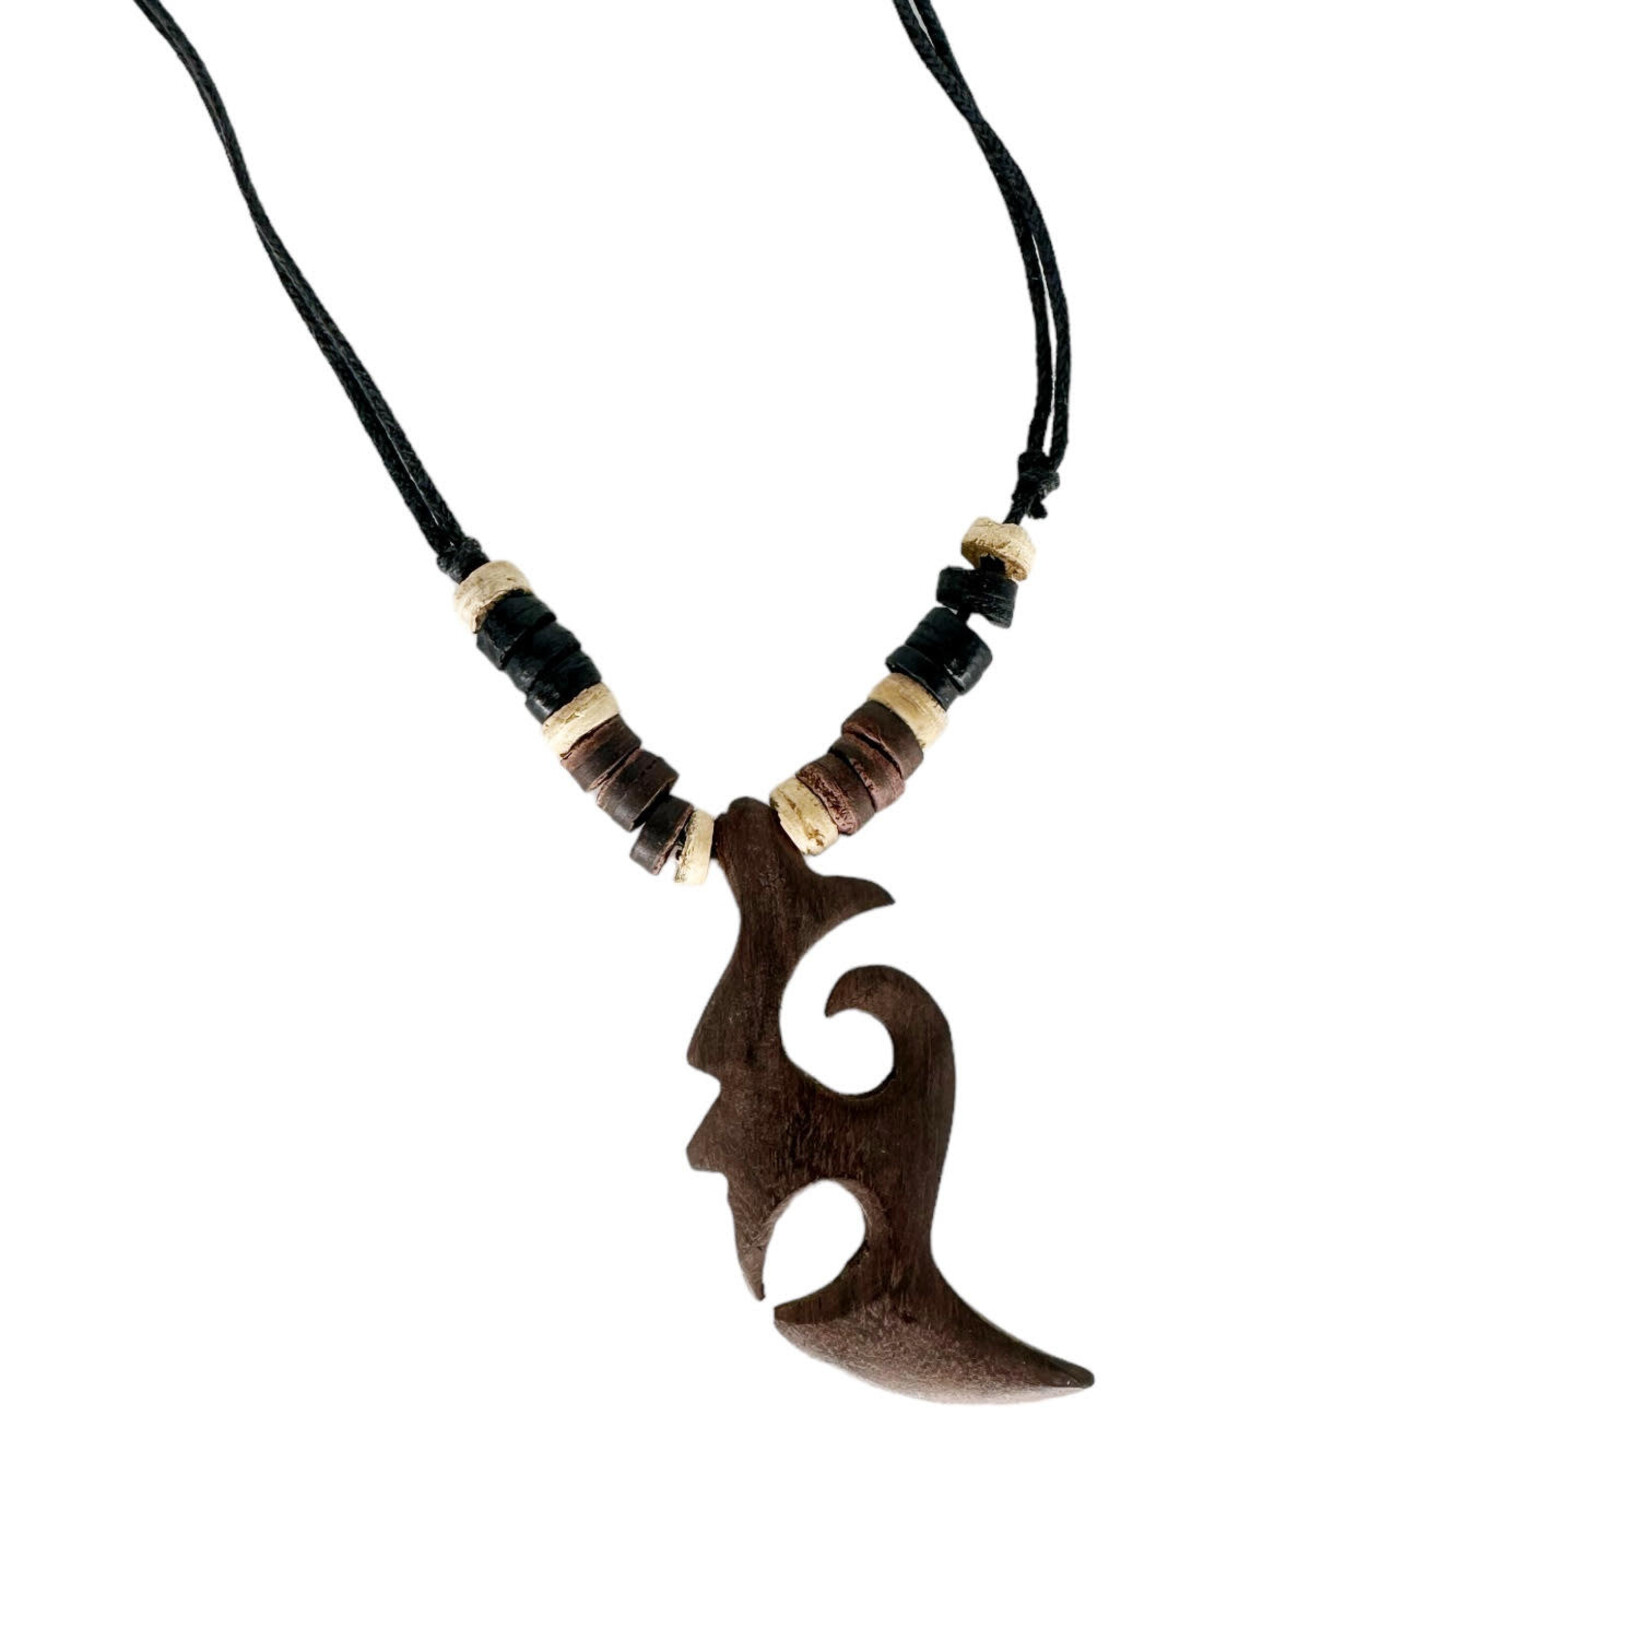 Carved Wood Tribal Hook Adjustable Cord Necklace